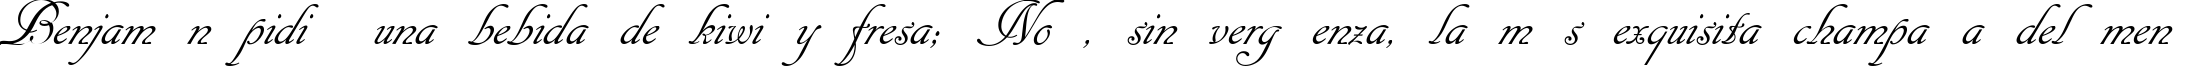 Пример написания шрифтом Cansellarist текста на испанском